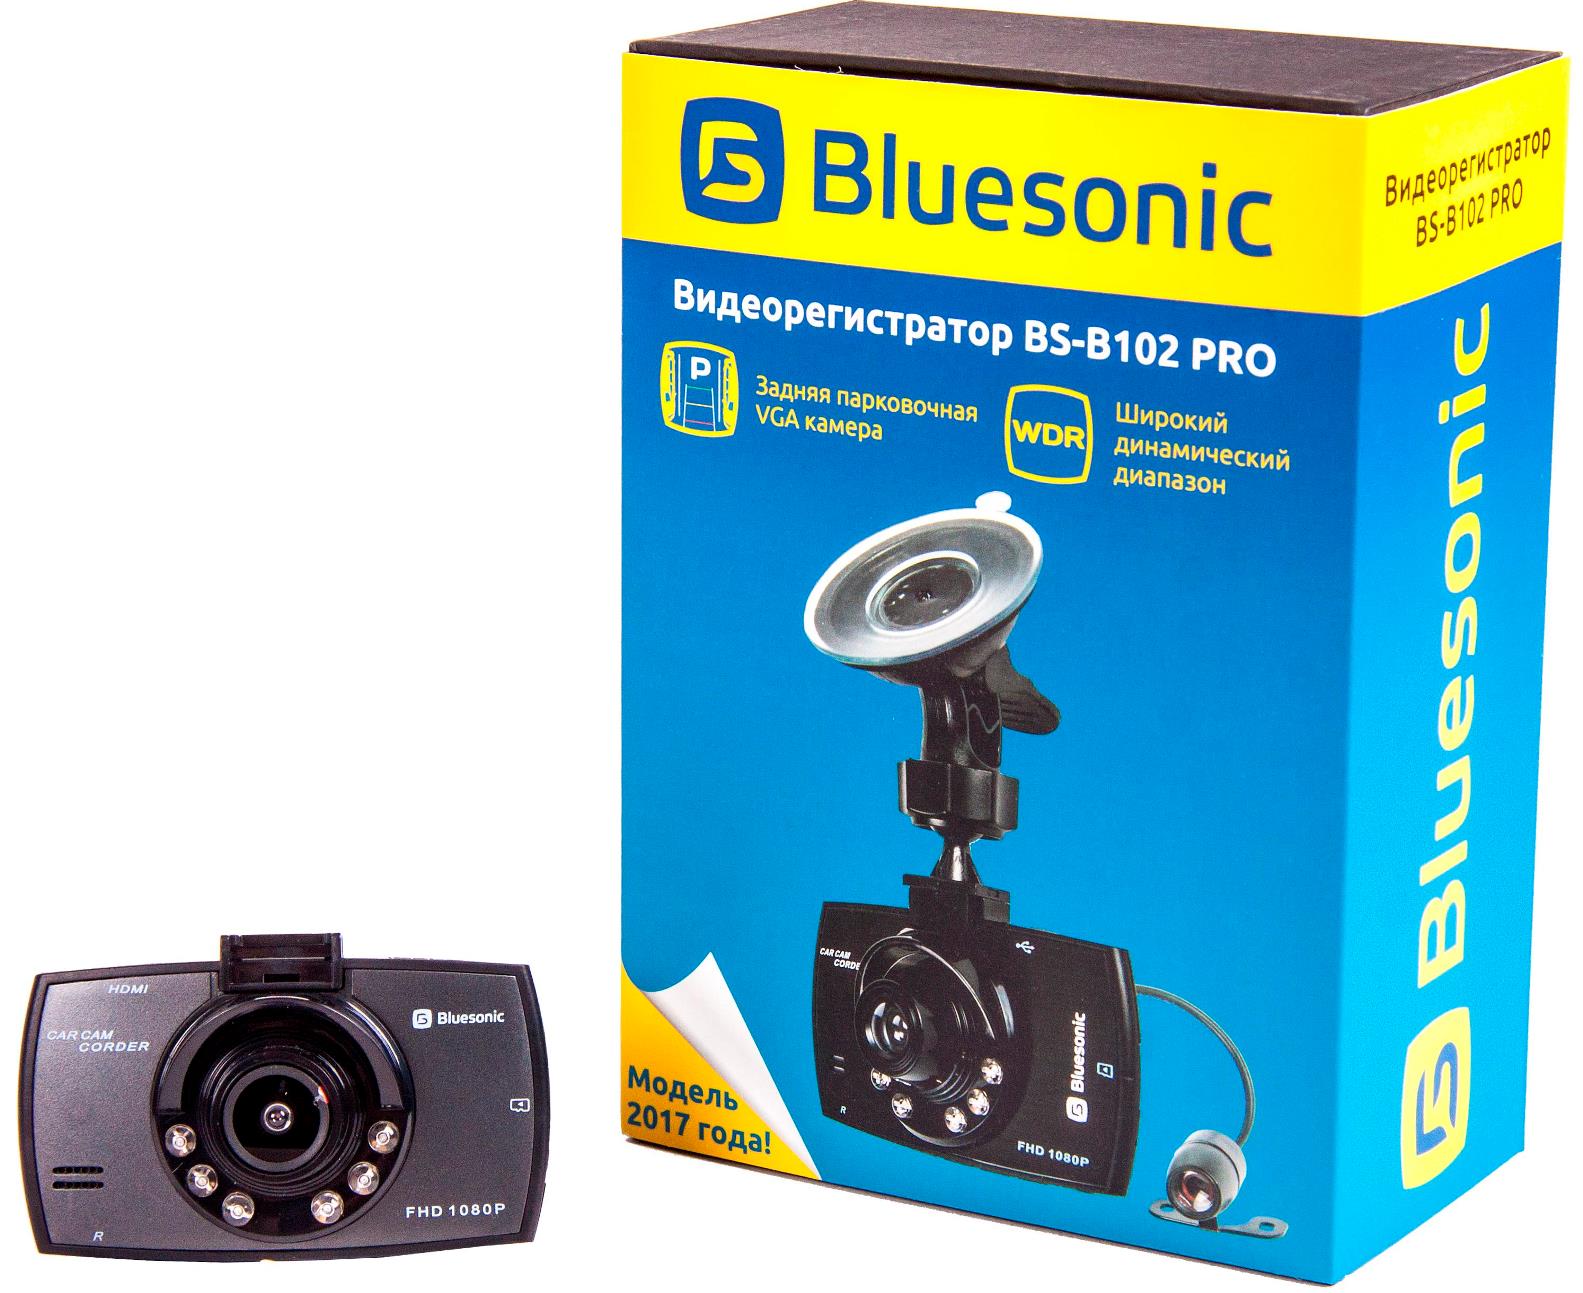 Two-channel dashcam Bluesonic BS-B102 PRO (Full HD + VGA, night vision)